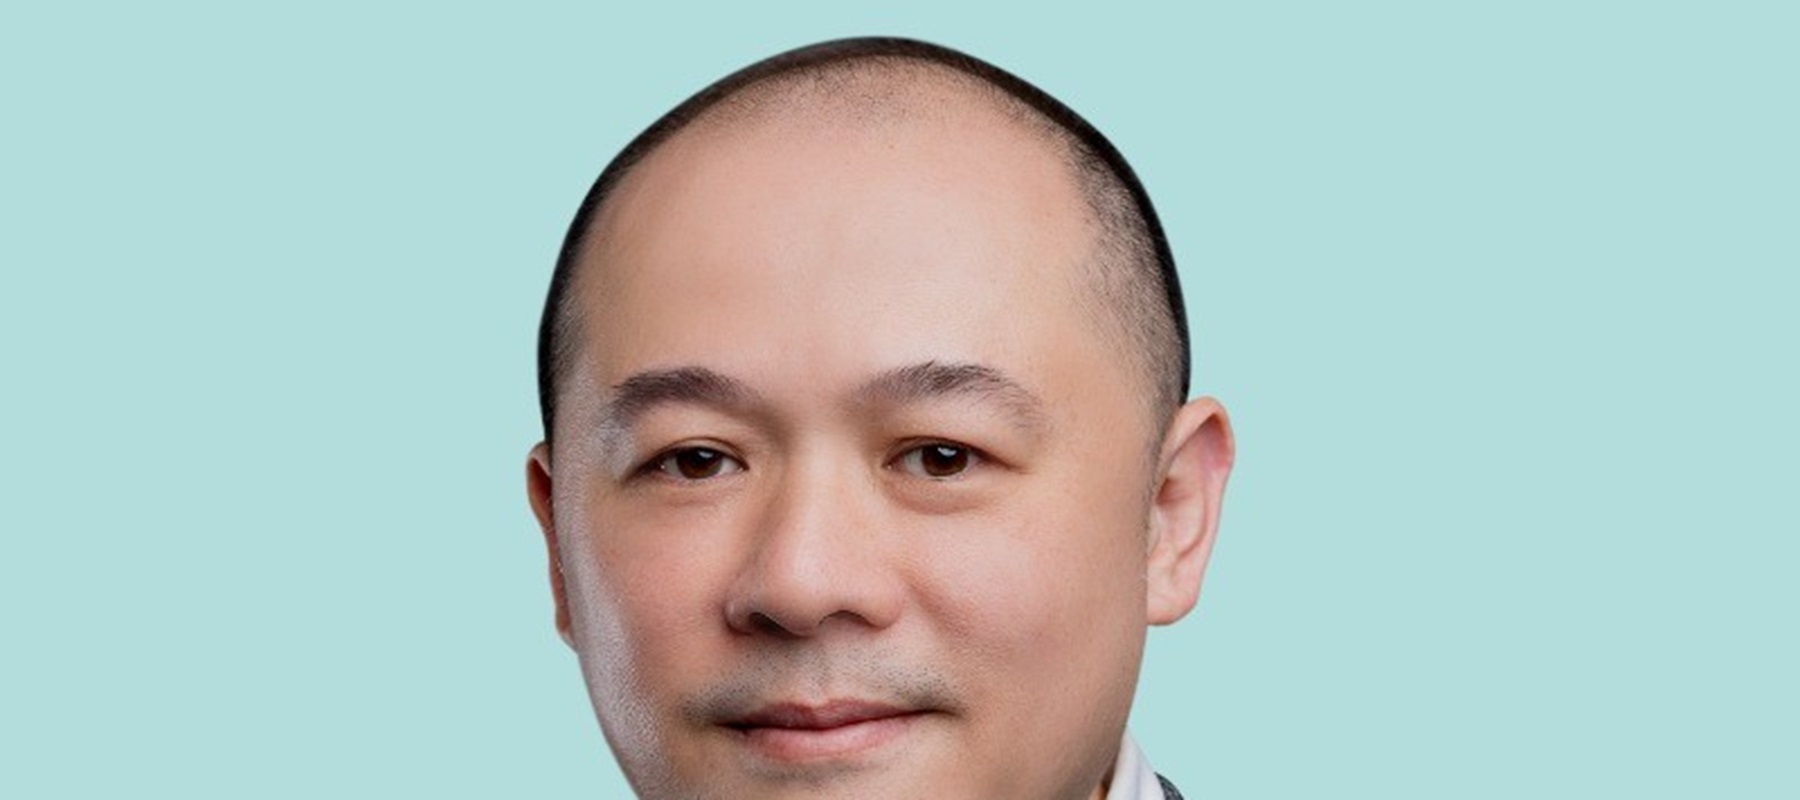 Locala names Vincent Pang as APAC Managing Director